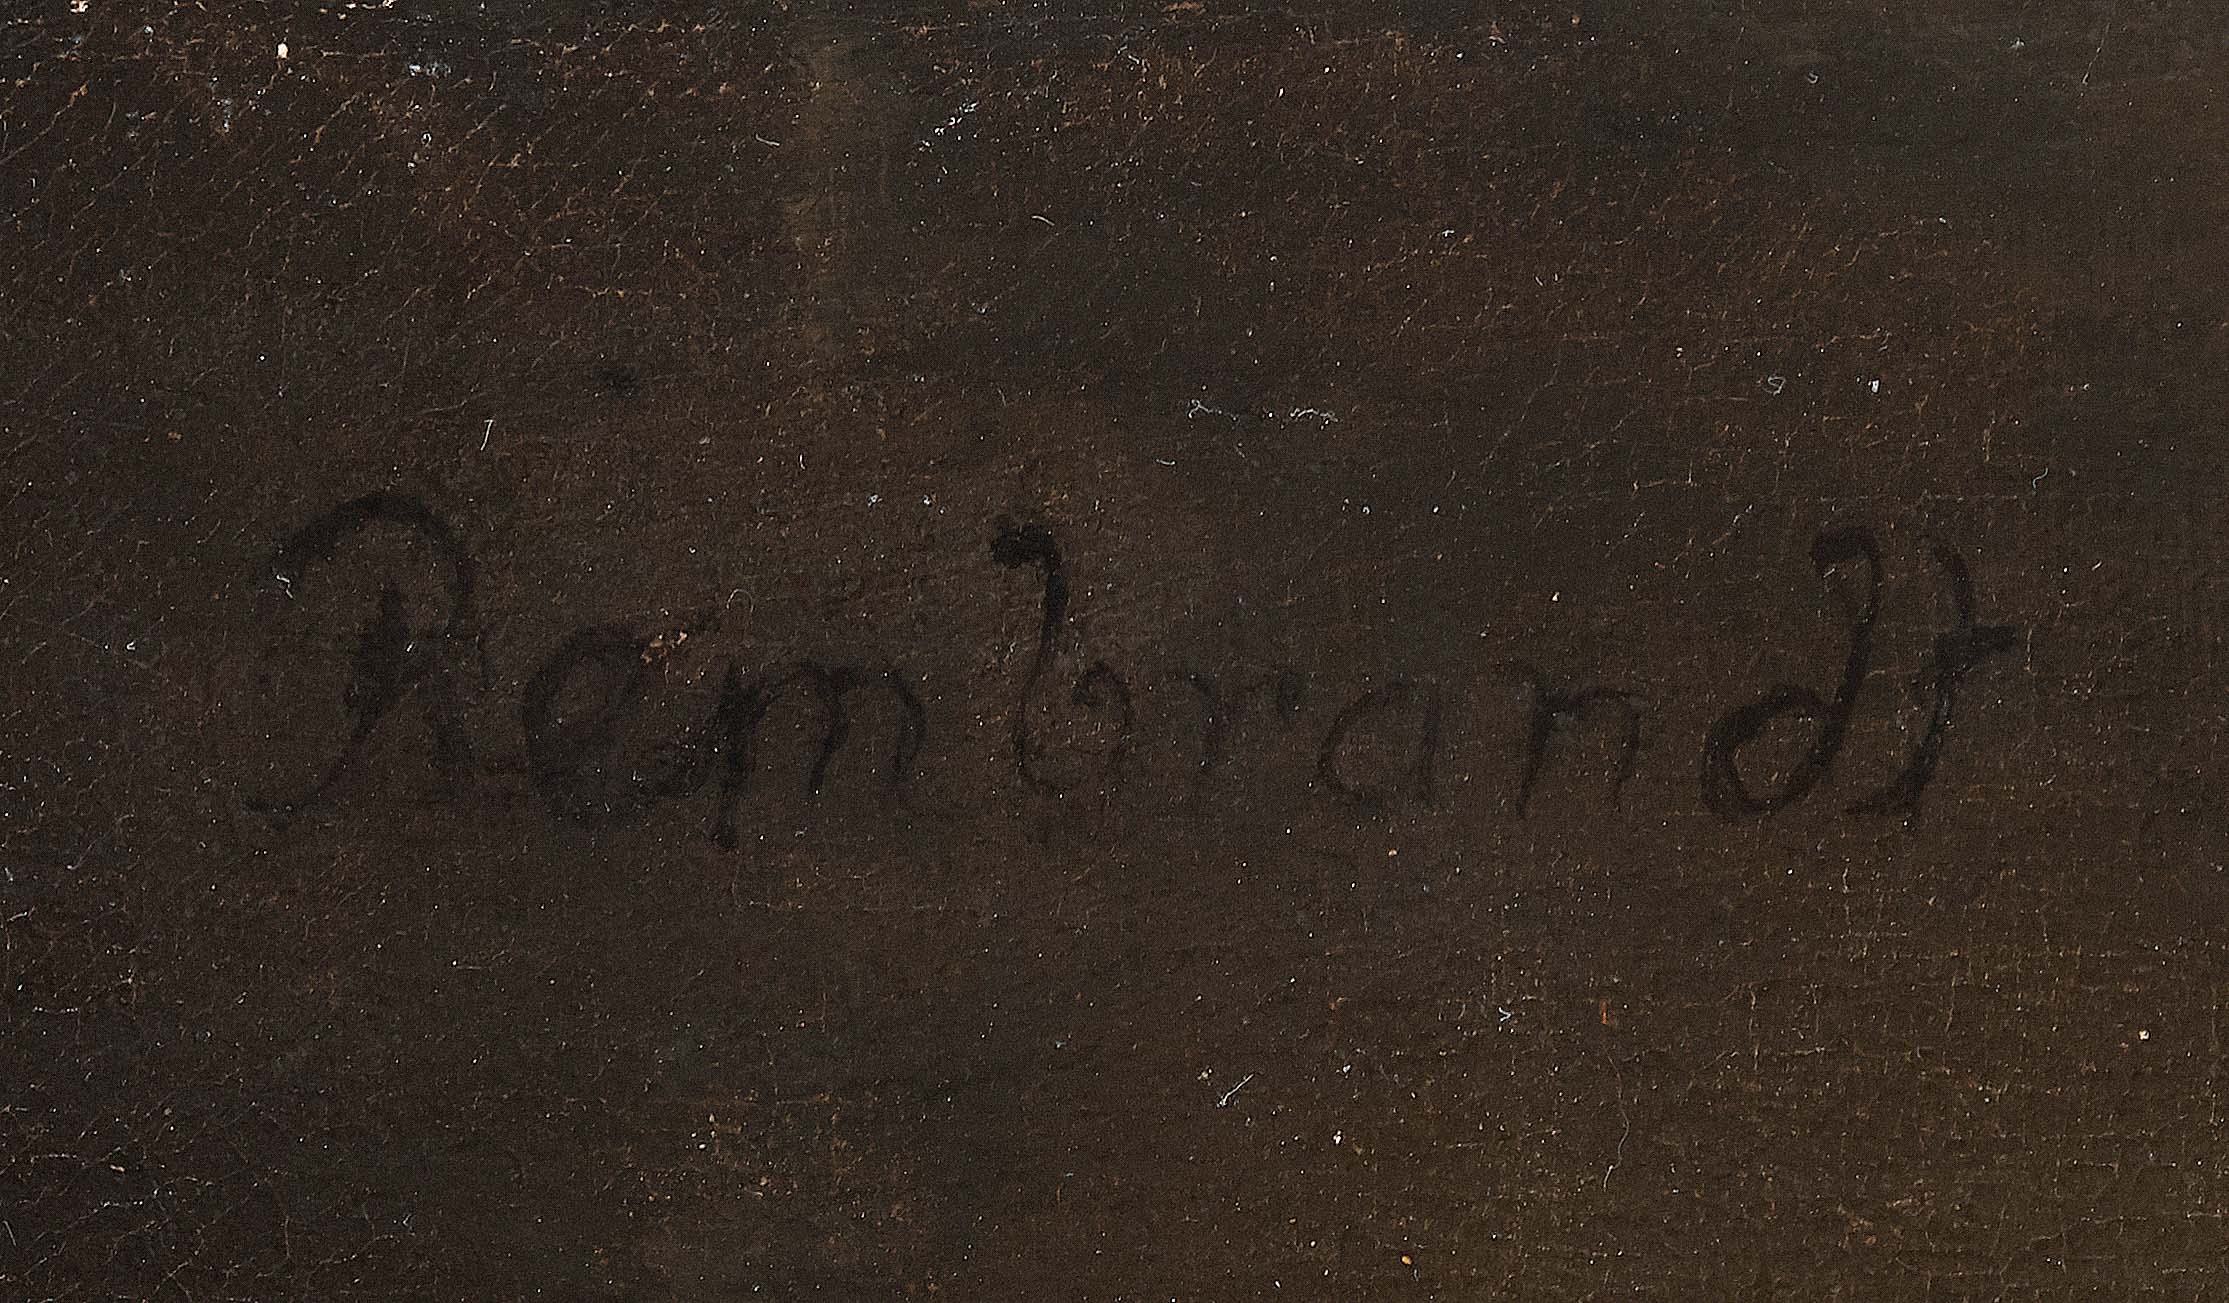 Rembrandt, Harmensz van Rijn - Image 2 of 2